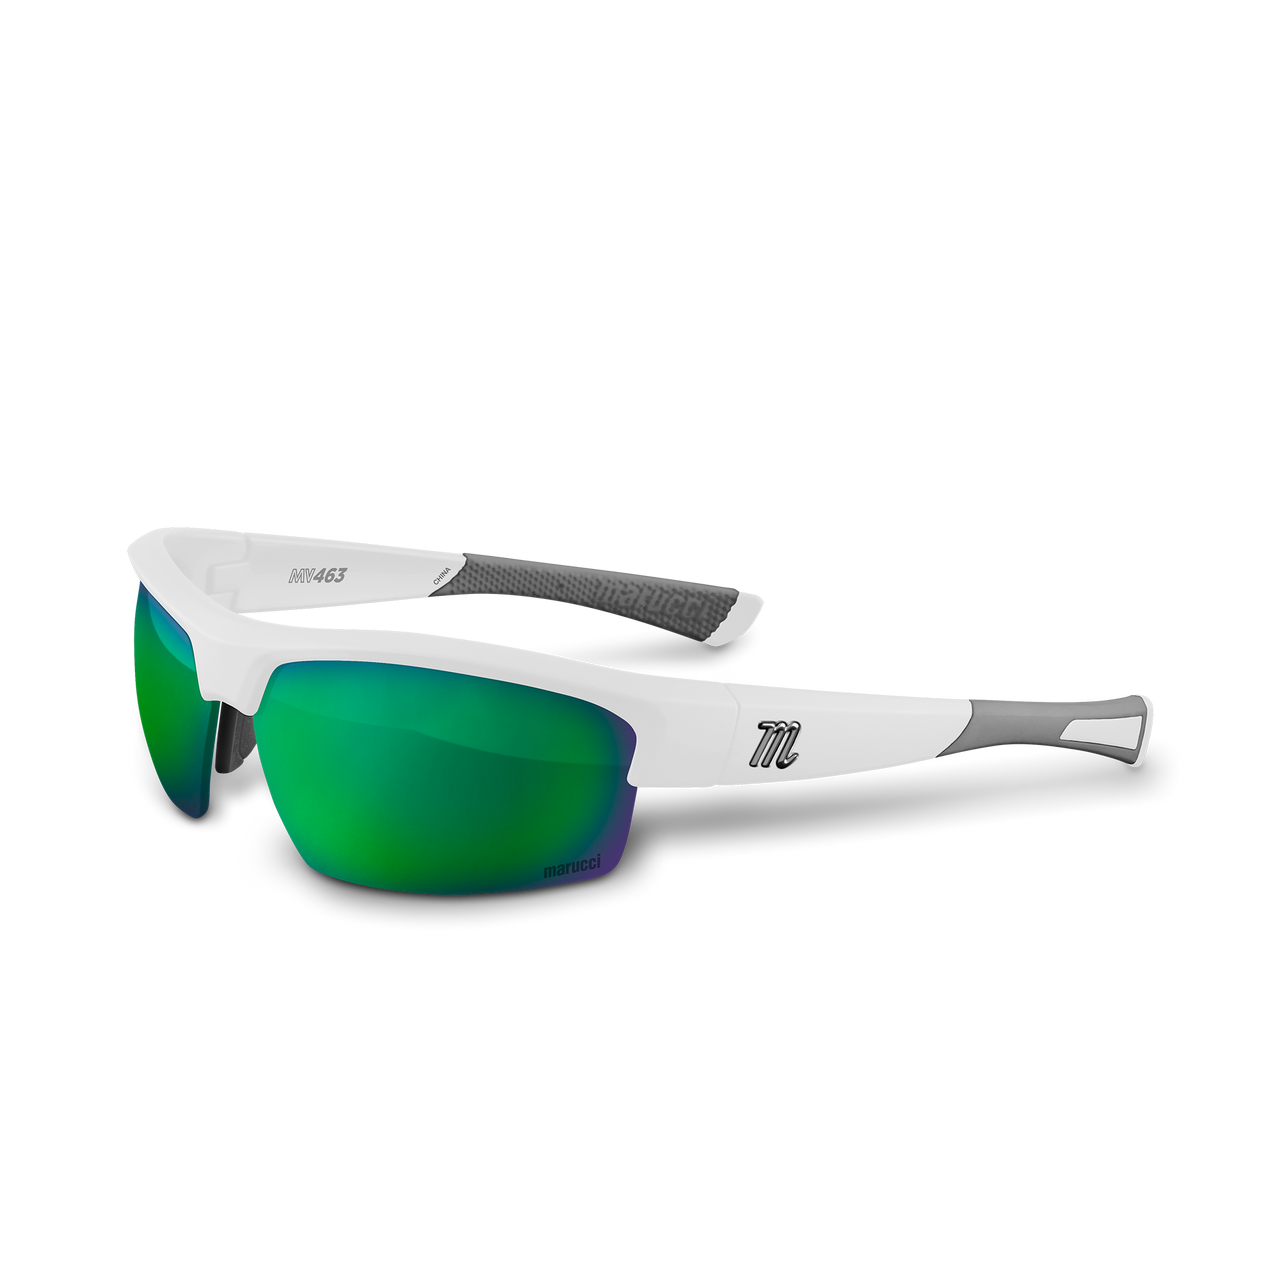 Marucci MV463 Performance Sunglasses - Matte White Matte White - Green Lens With Green Mirror 